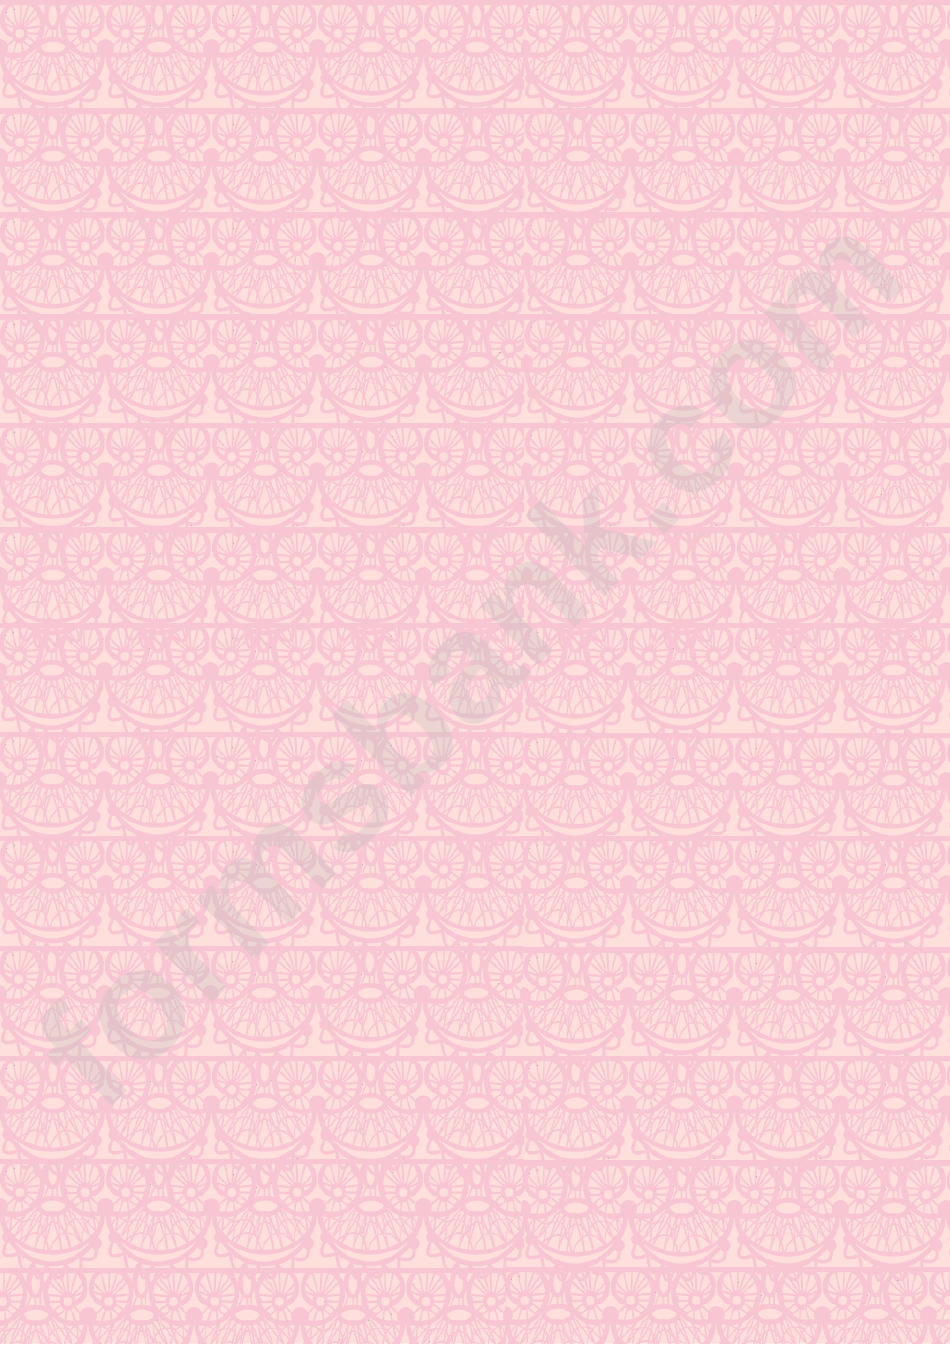 Light Pink Lace Decorative Paper